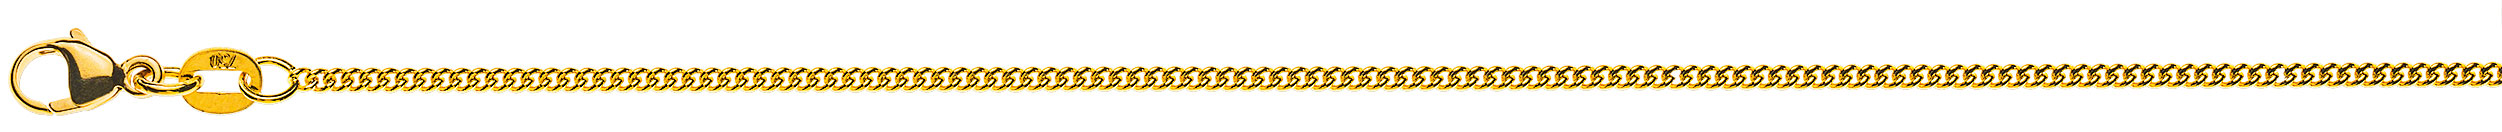 AURONOS Prestige Necklace yellow gold 18K round curb chain 55cm 1.6mm